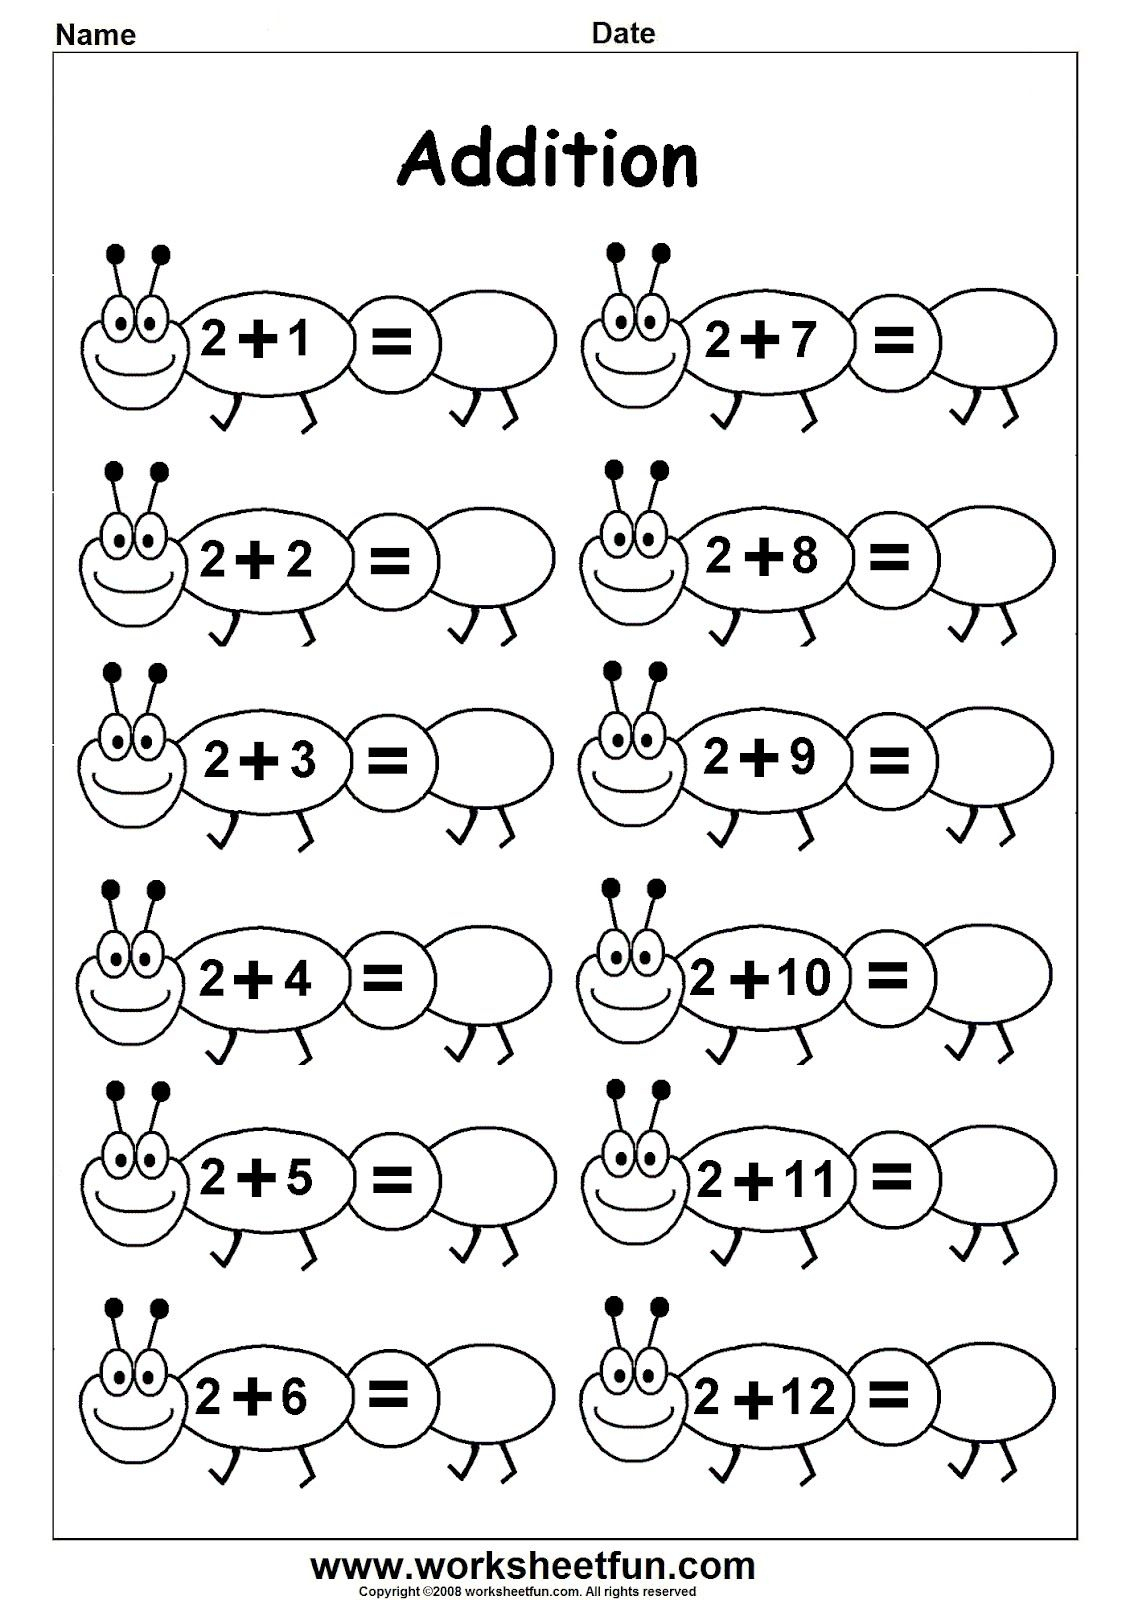 Worksheetfun - Free Printable Worksheets | Ethan School | Printable Addition Worksheets Kindergarten